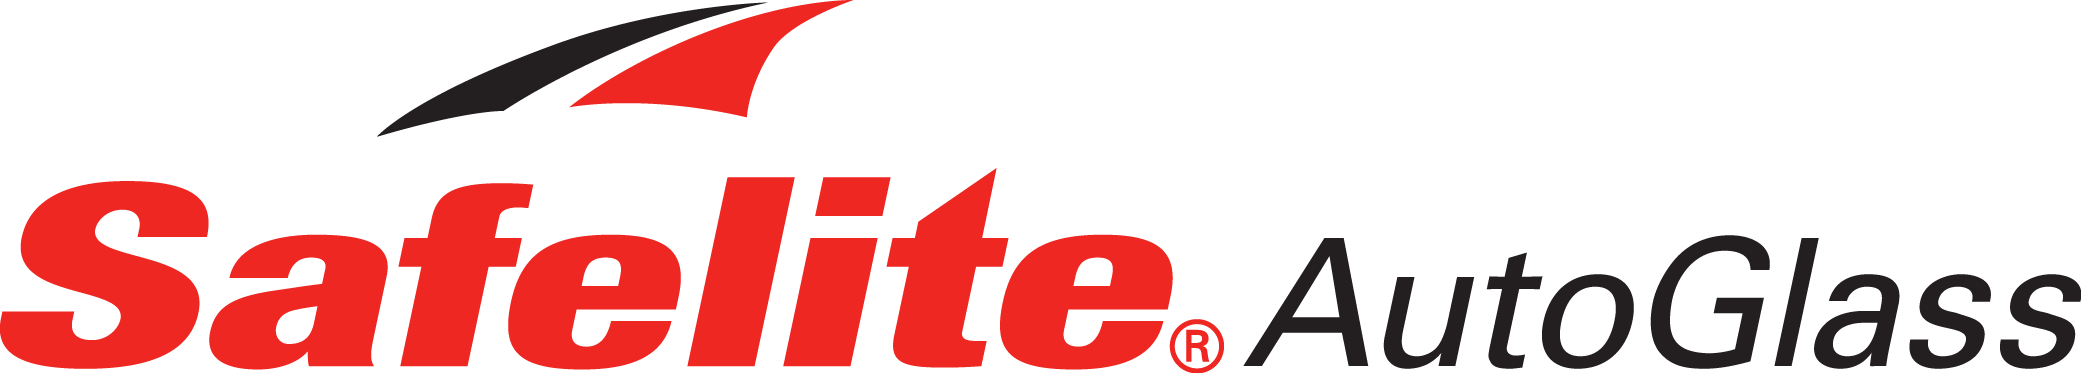 Safelite Autoglass Logo png